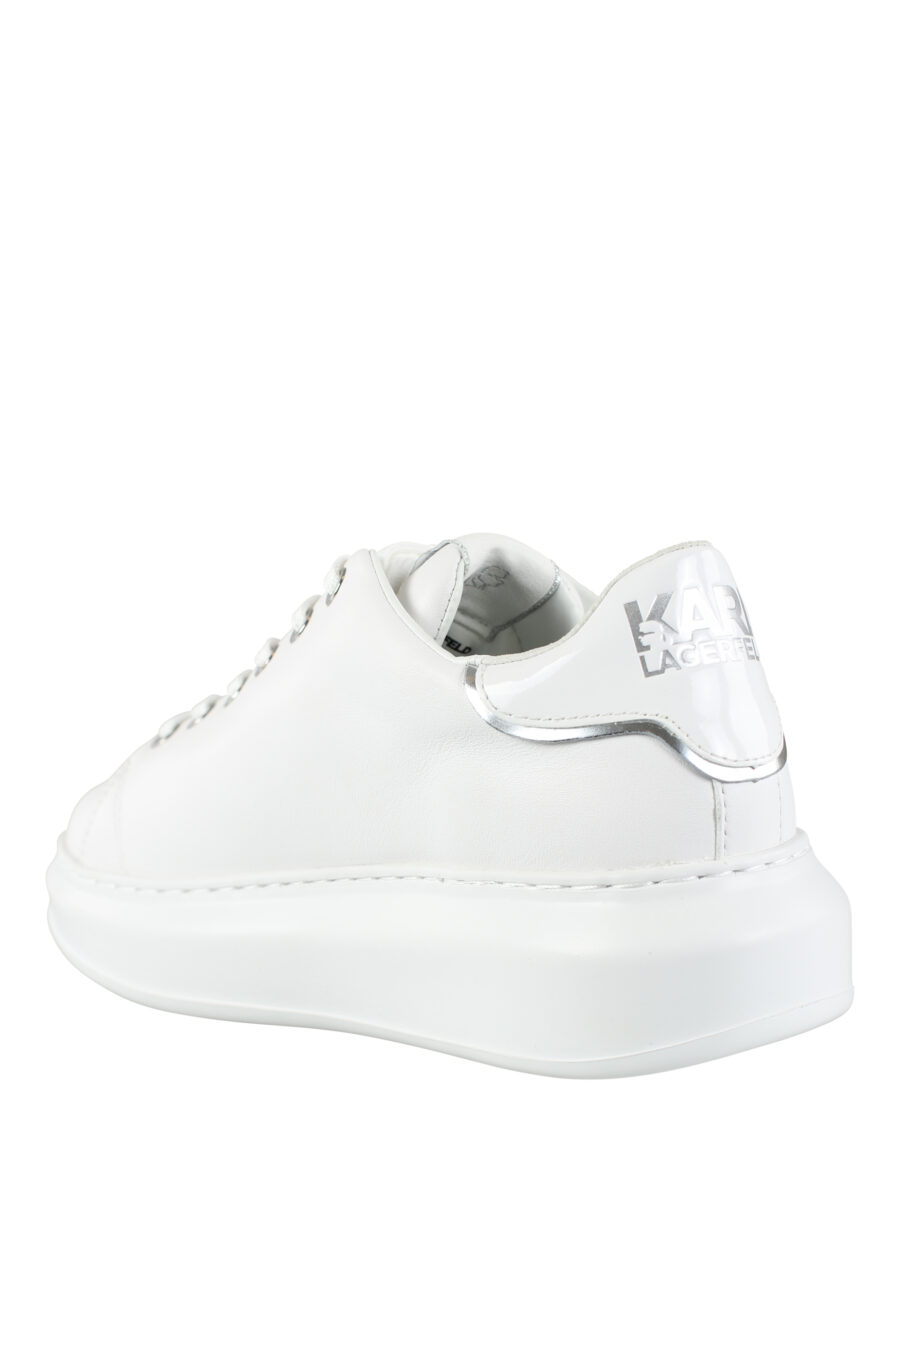 Zapatillas blancas con logo lettering "rue st guillaume" plateado - IMG 9568 1